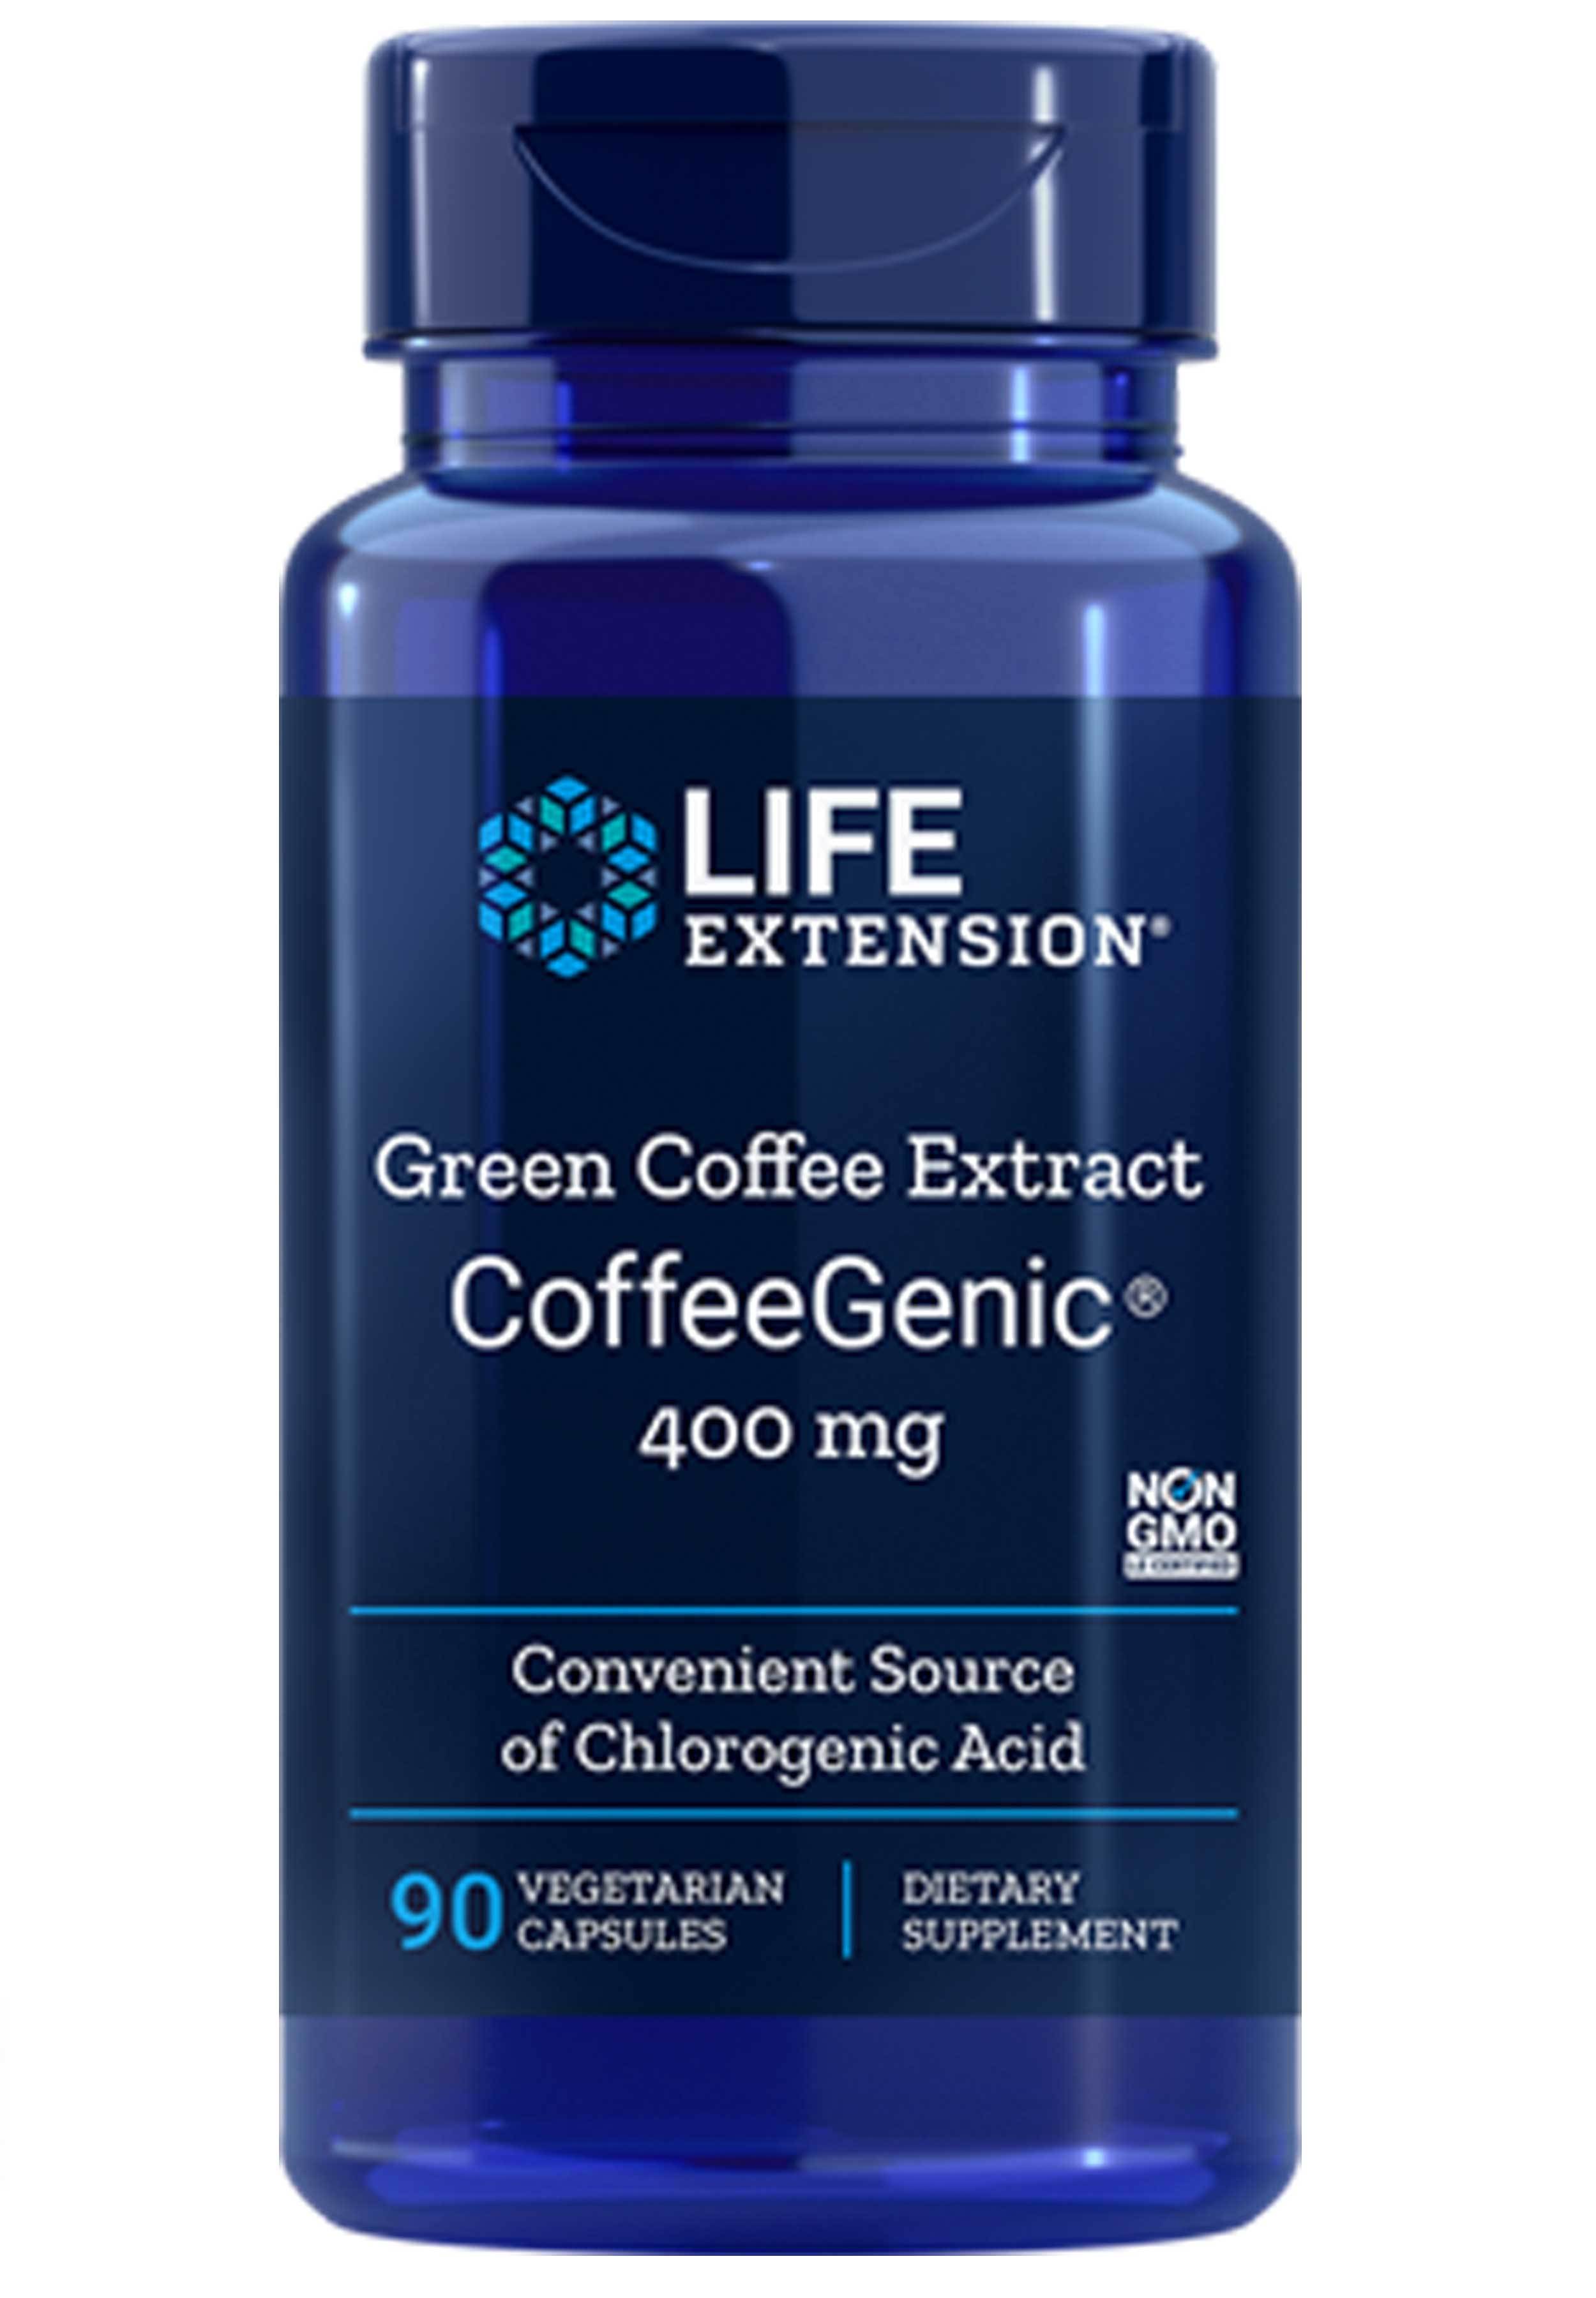 Life Extension CoffeeGenic Green Coffee Extract